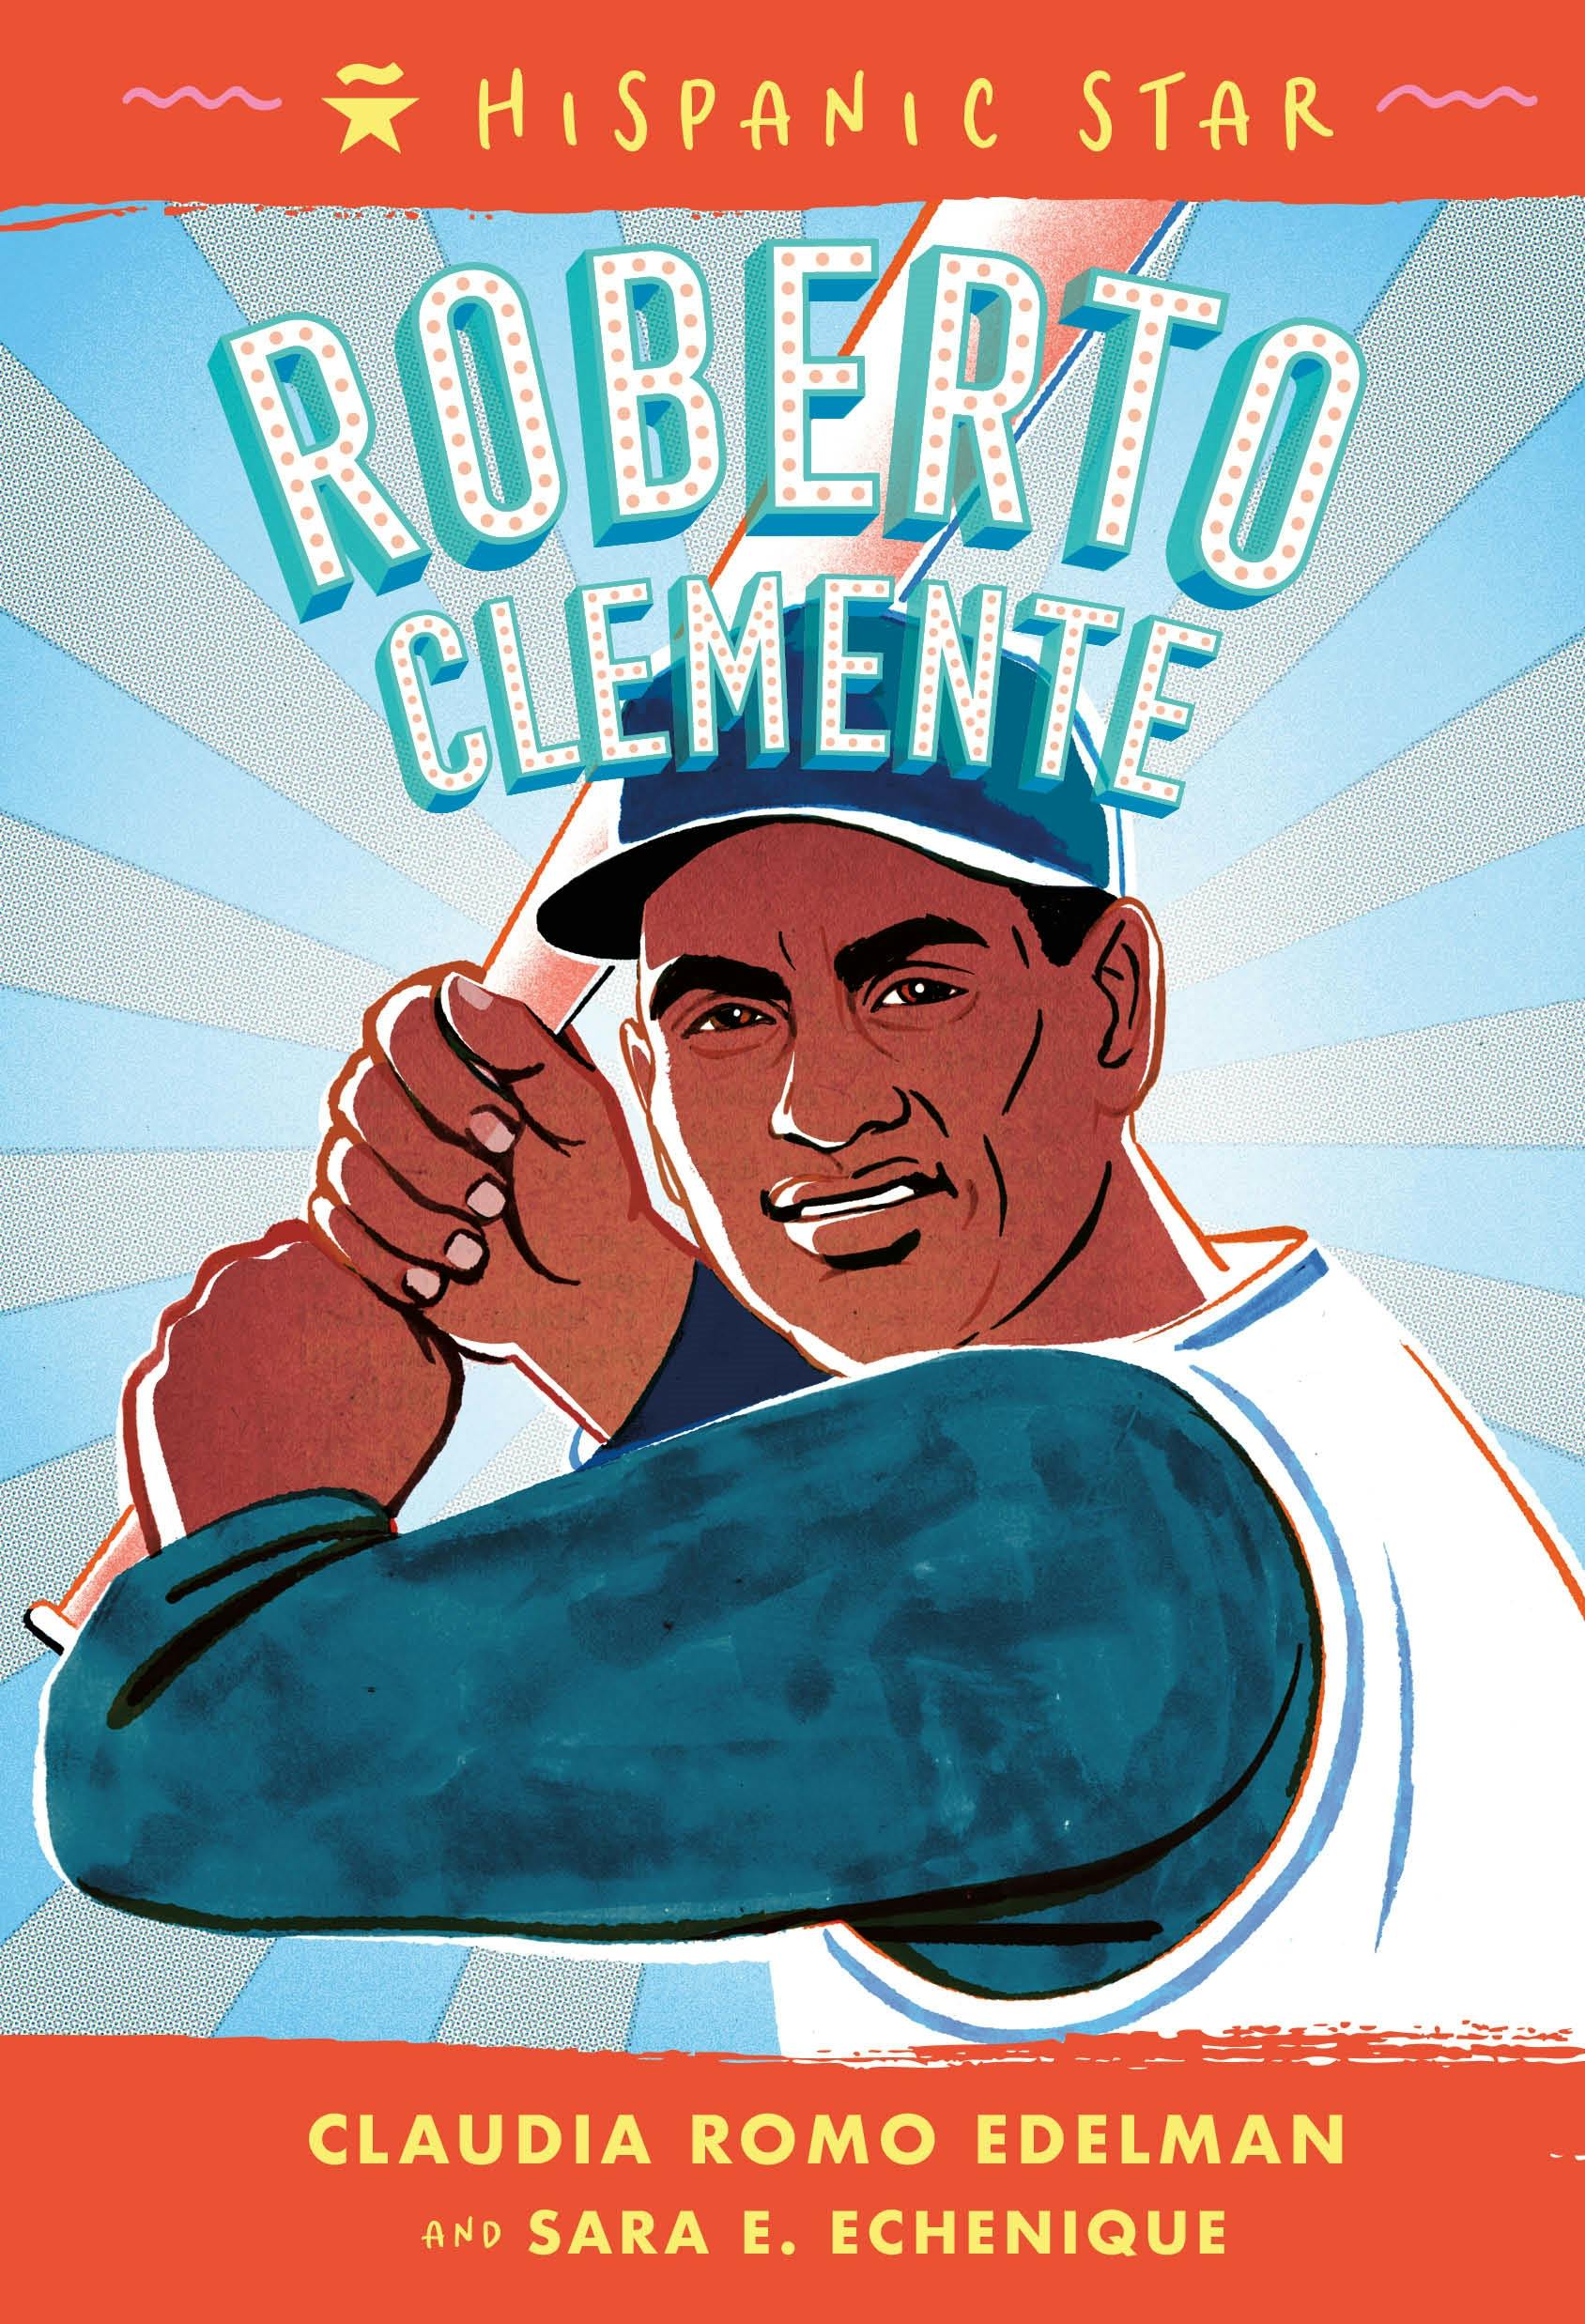 Roberto Clemente's Nickname